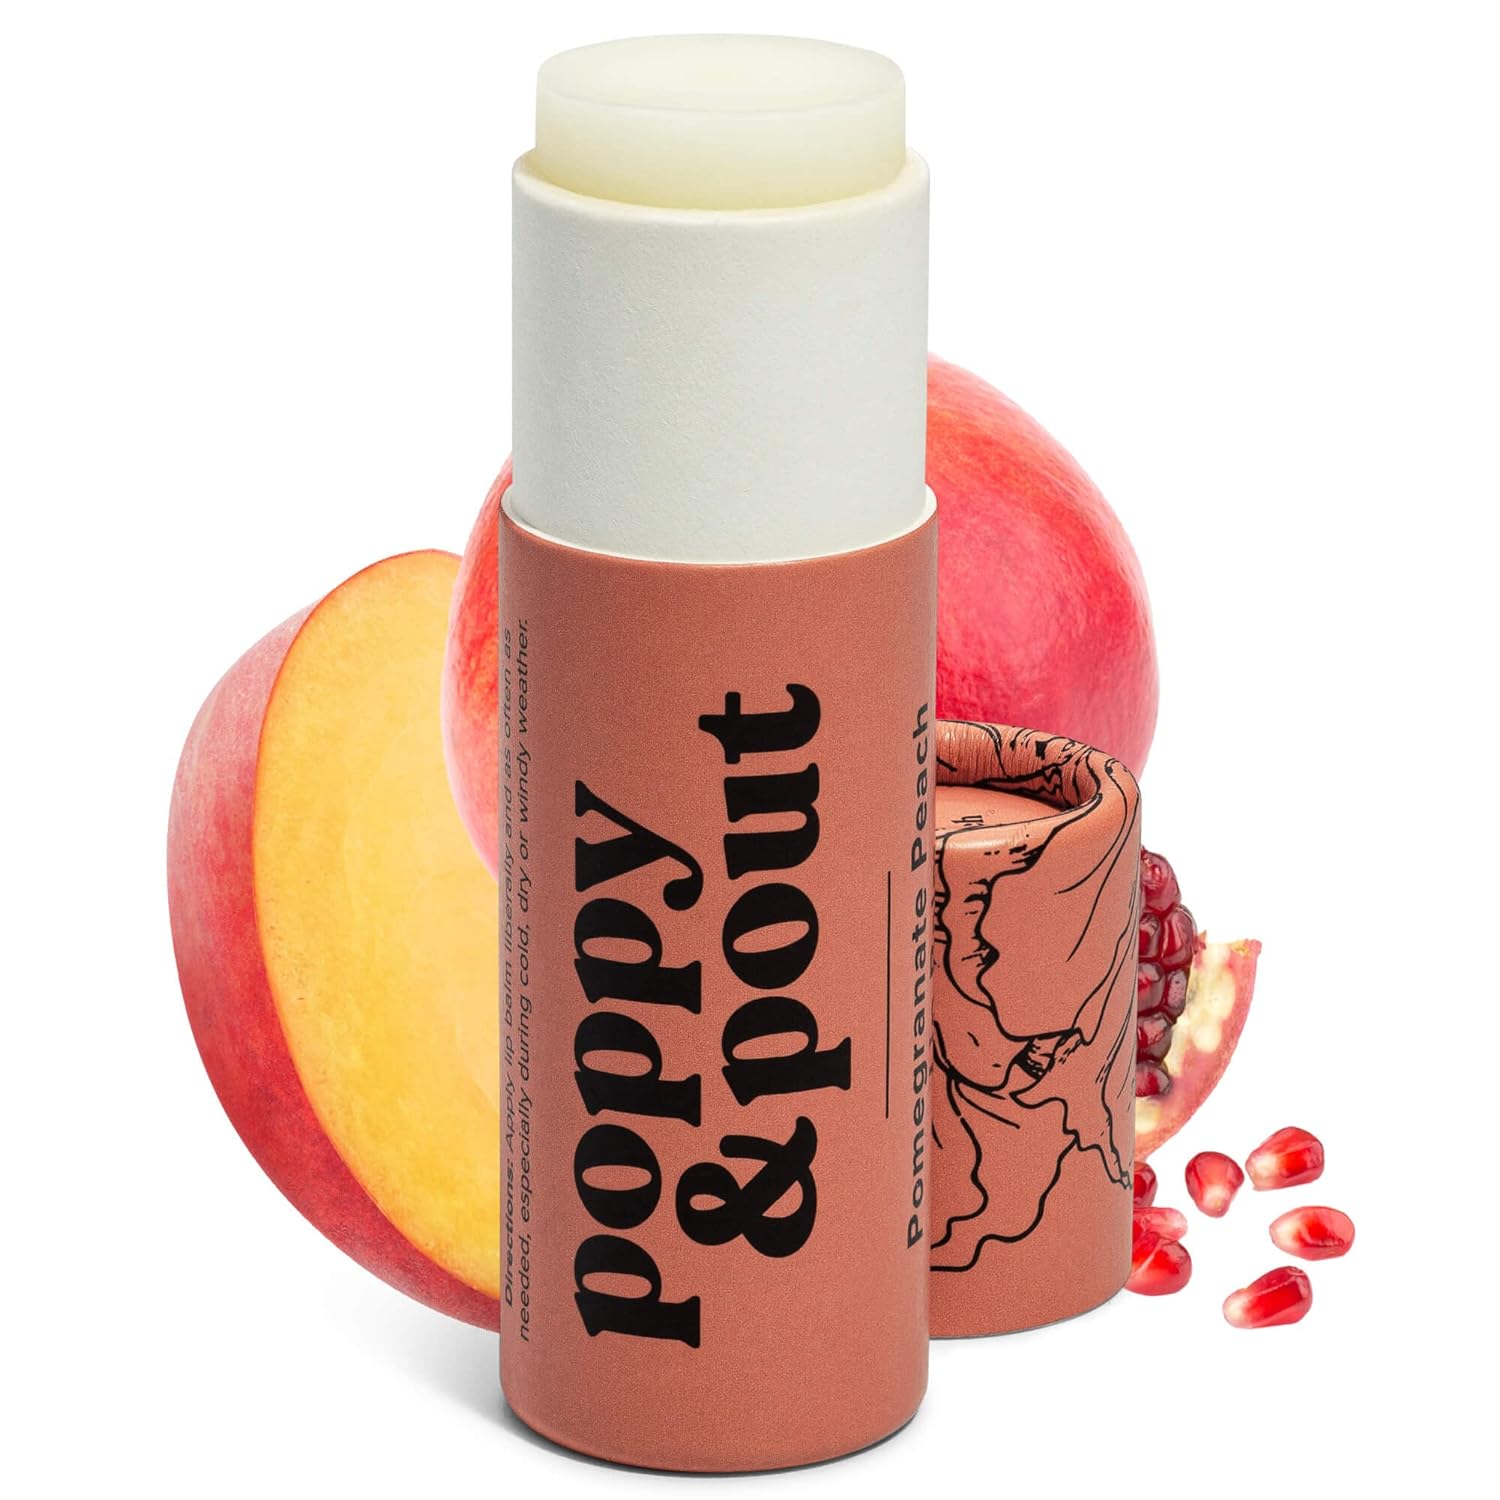 Poppy and Pout Lip Balm - Pomegranate Peach